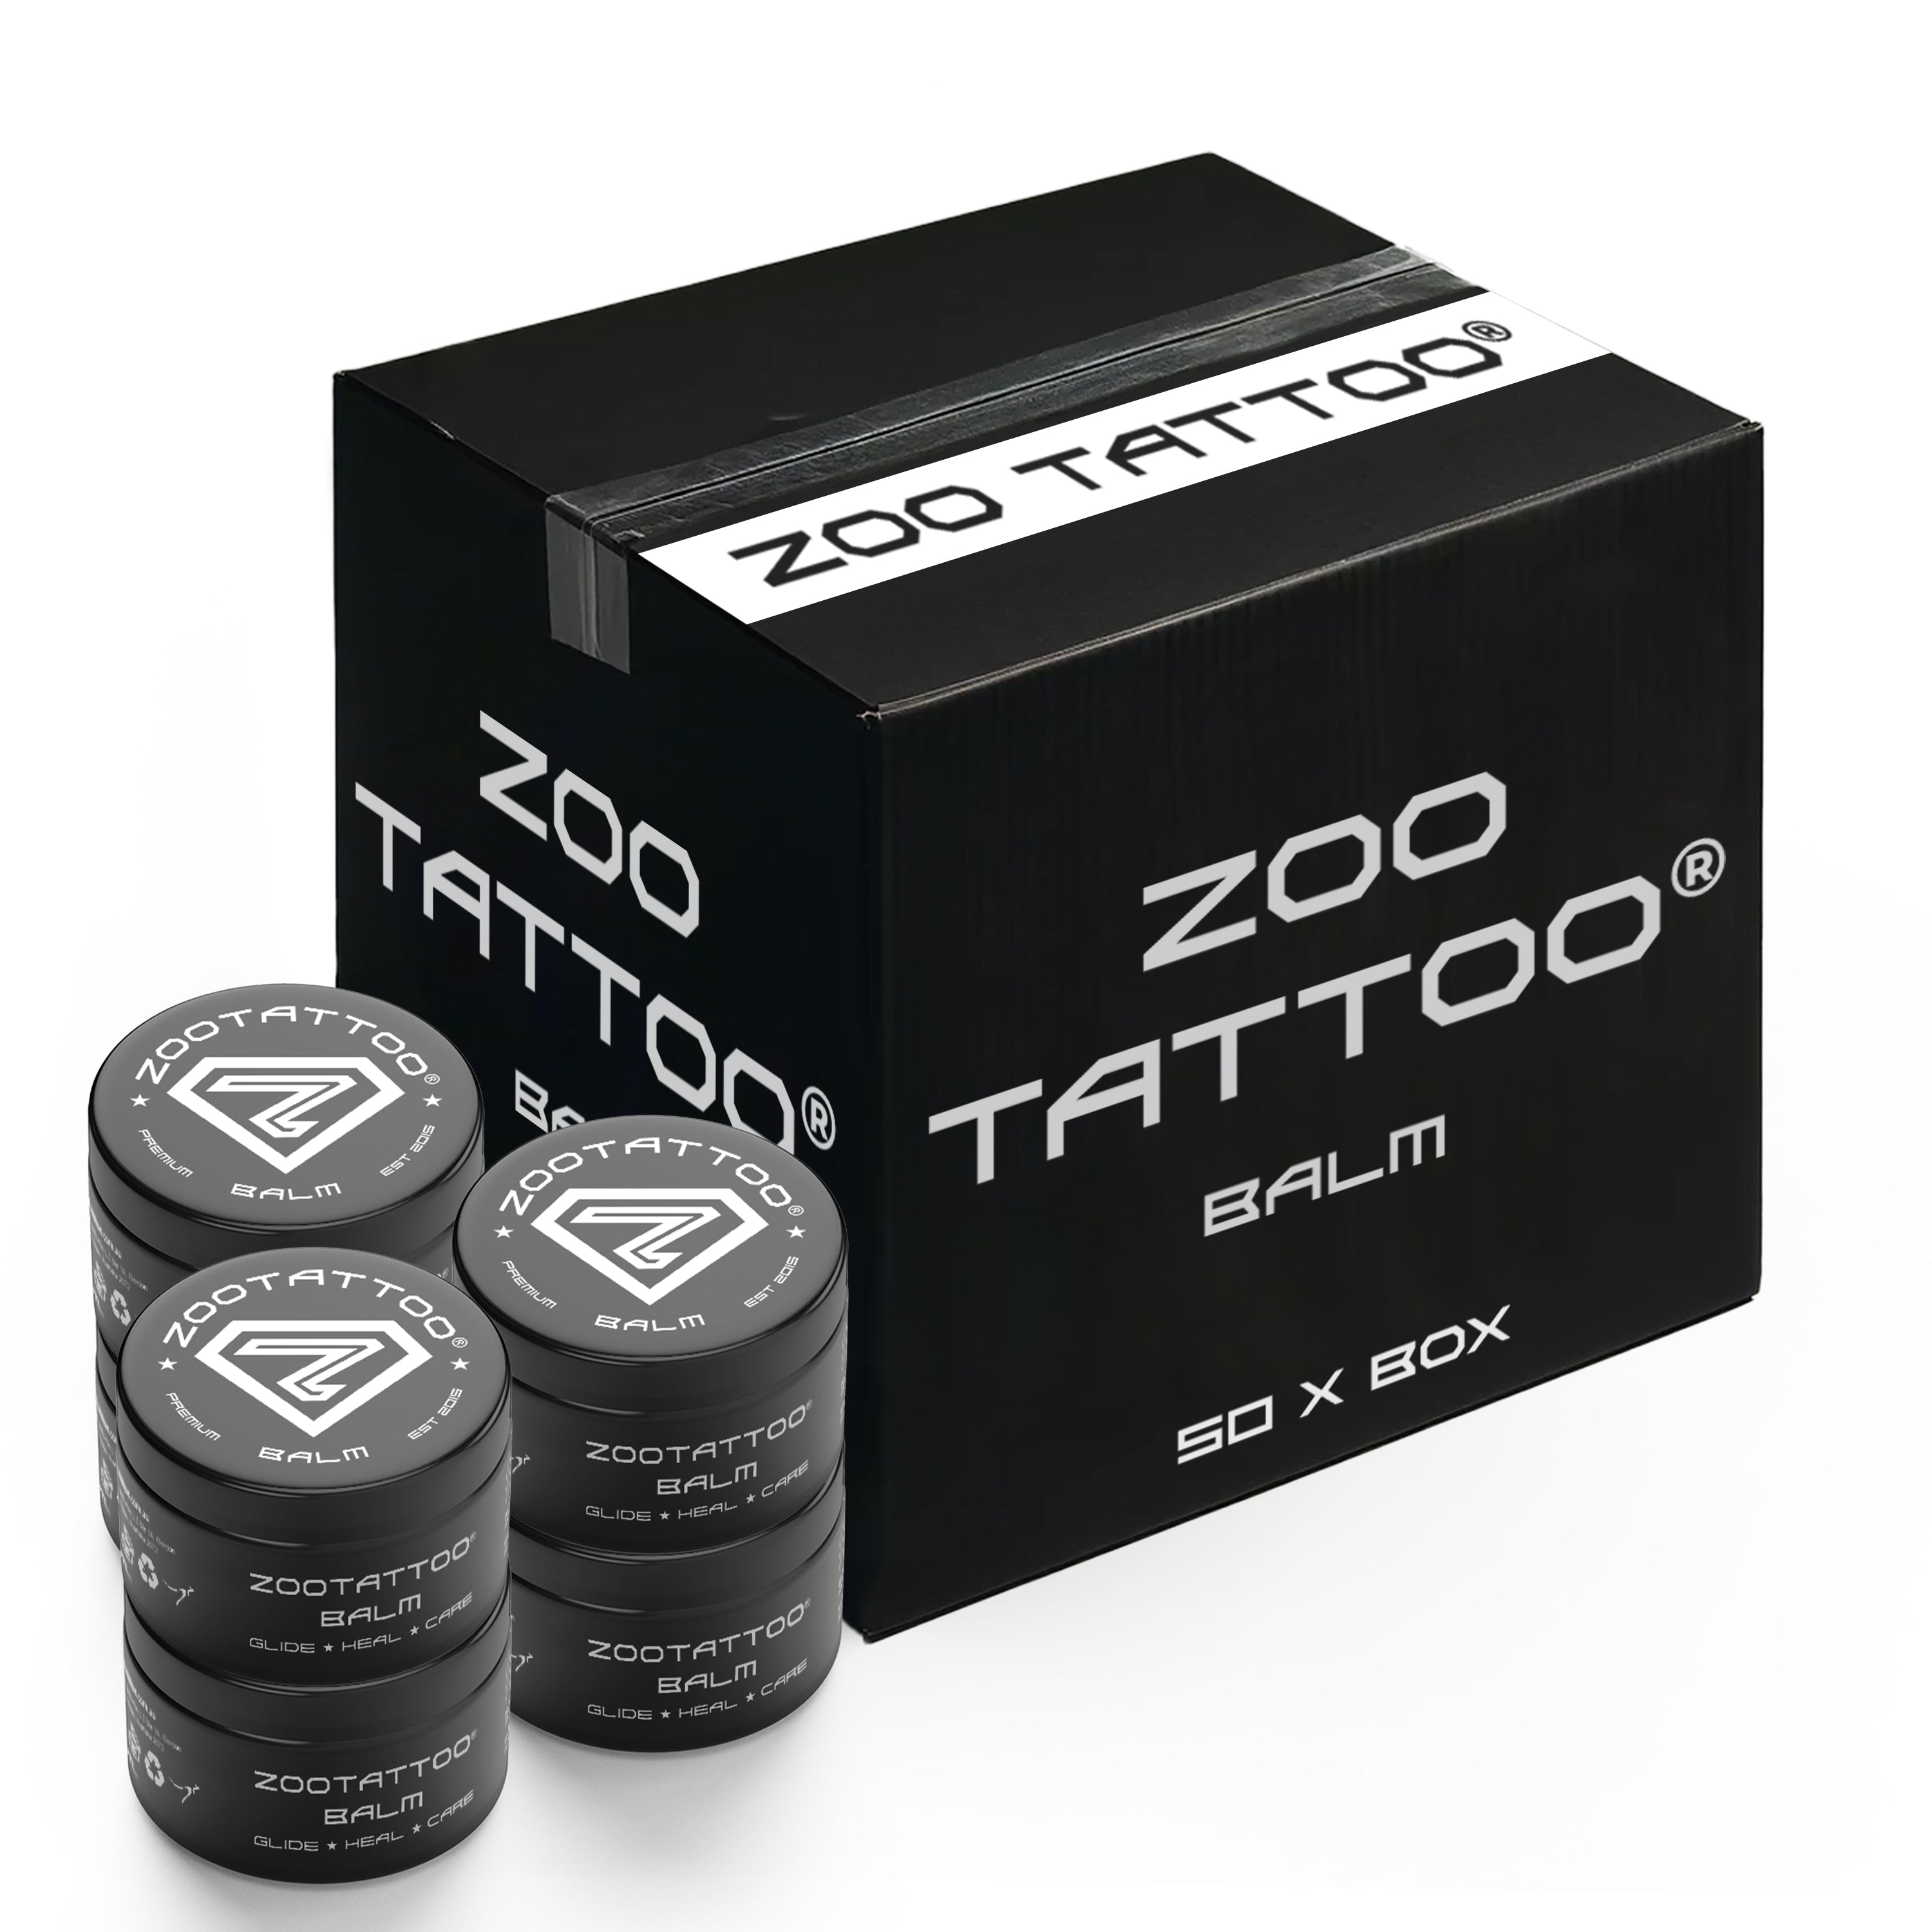 ZOOTATTOO® Balm 150ml Wholesale 50 Box